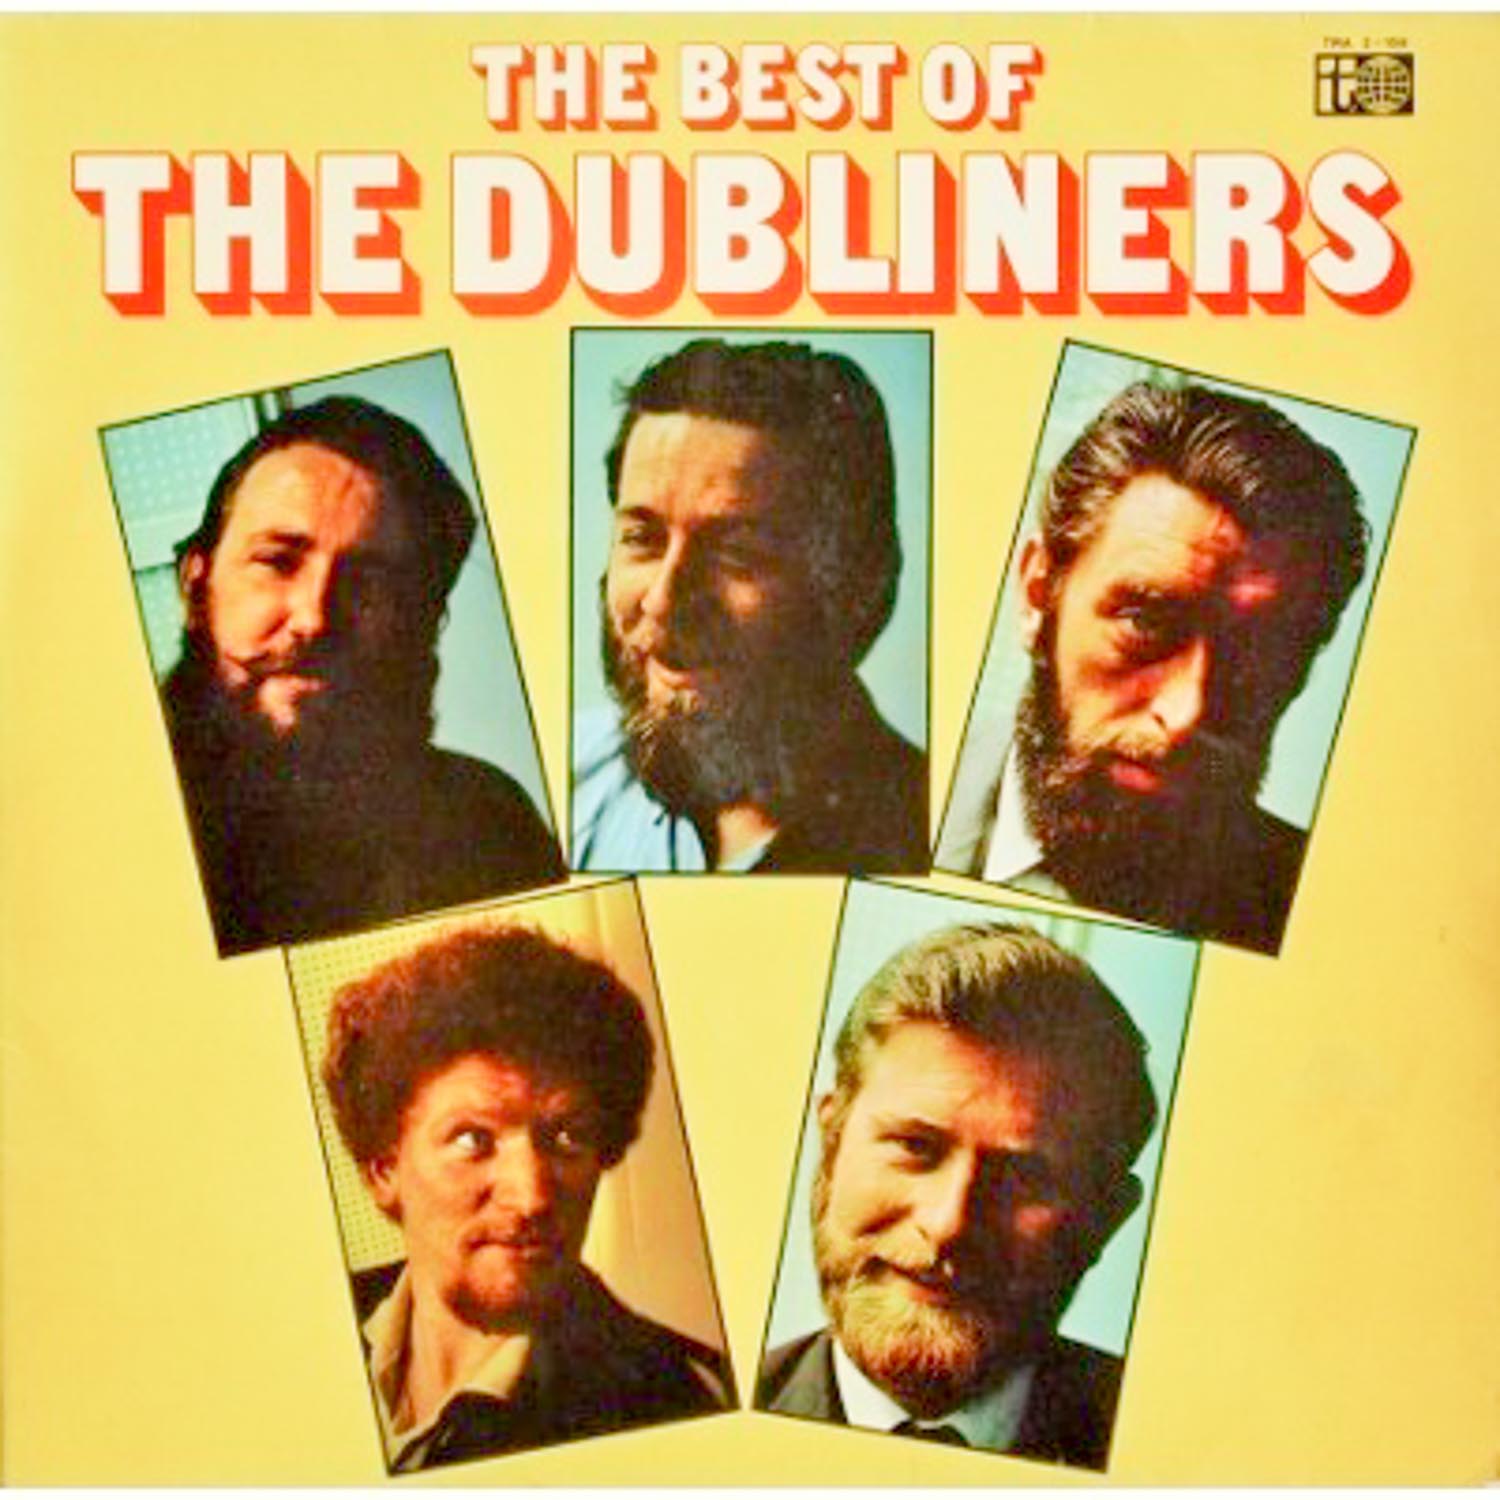 The Dubliners  The Best of the Dubliners (TRA 2-158) (Doppel-LP)  *LP 12'' (Vinyl)*. 